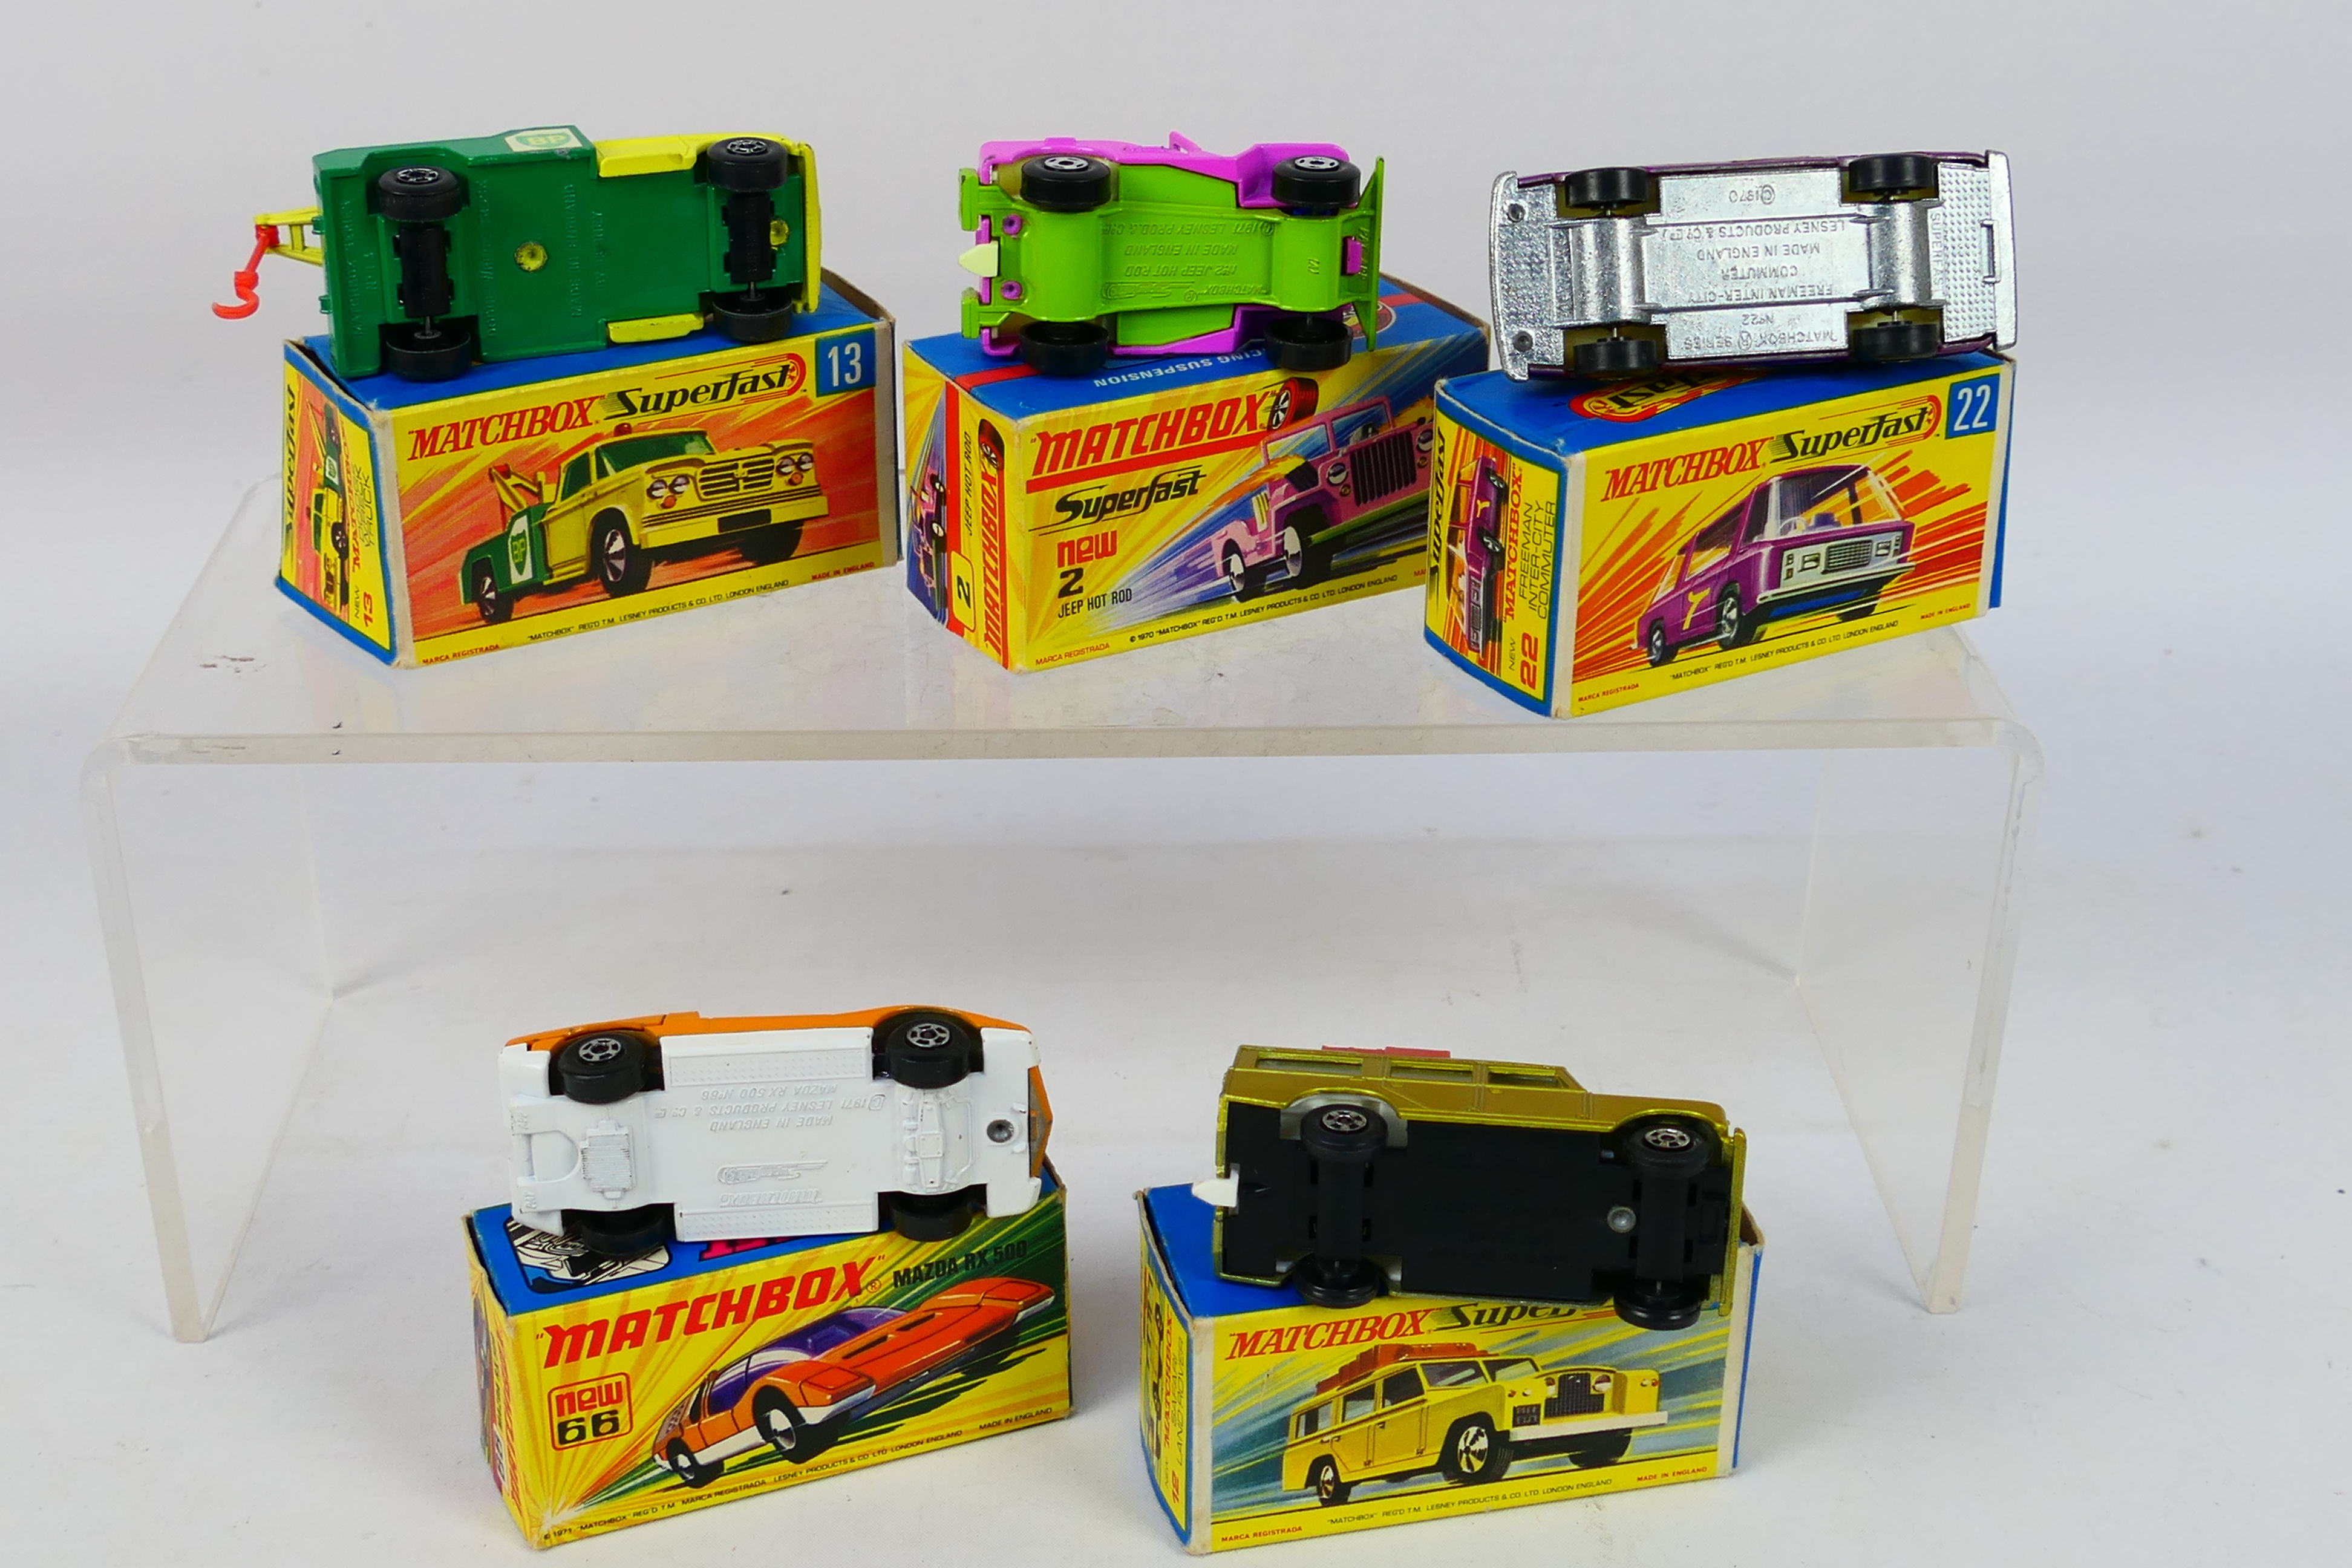 Matchbox - Superfast - 5 x boxed models, Jeep Hot Rod # 2, Land Rover Safari # 12, - Image 6 of 6